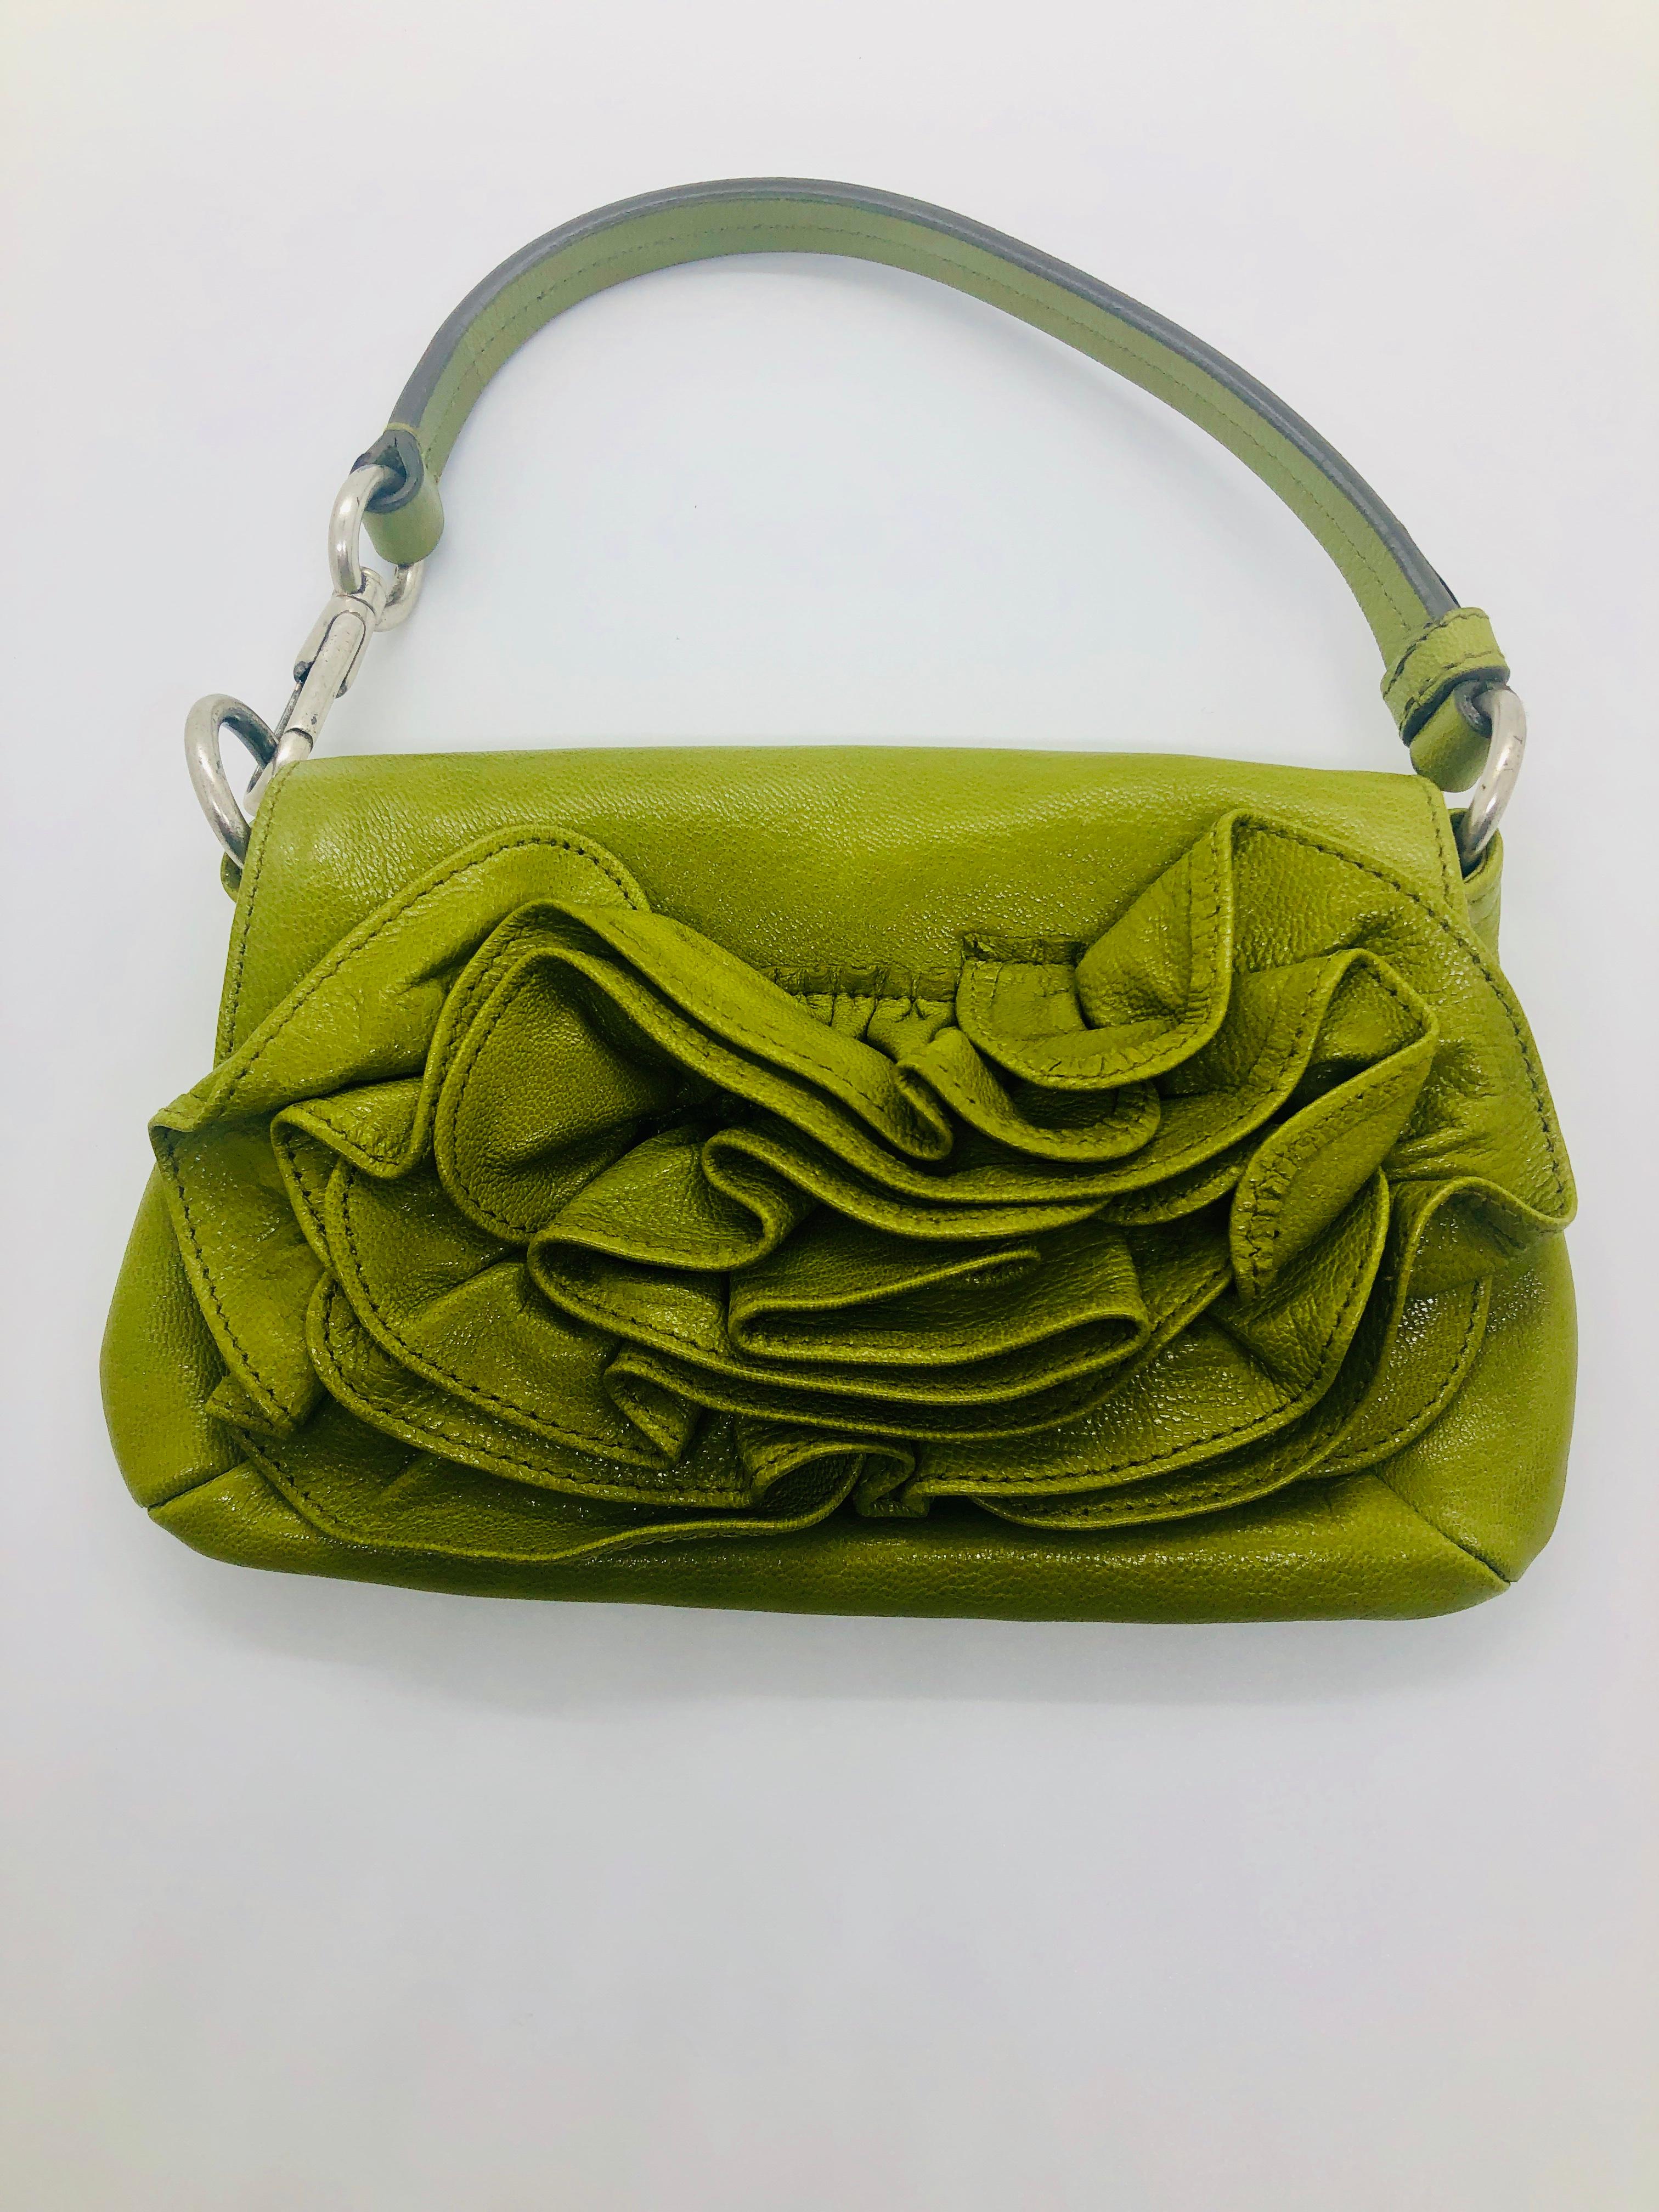 Yves Saint Laurent Chartreuse Green Leather Floral Ruffle Mini Shoulder Bag 8